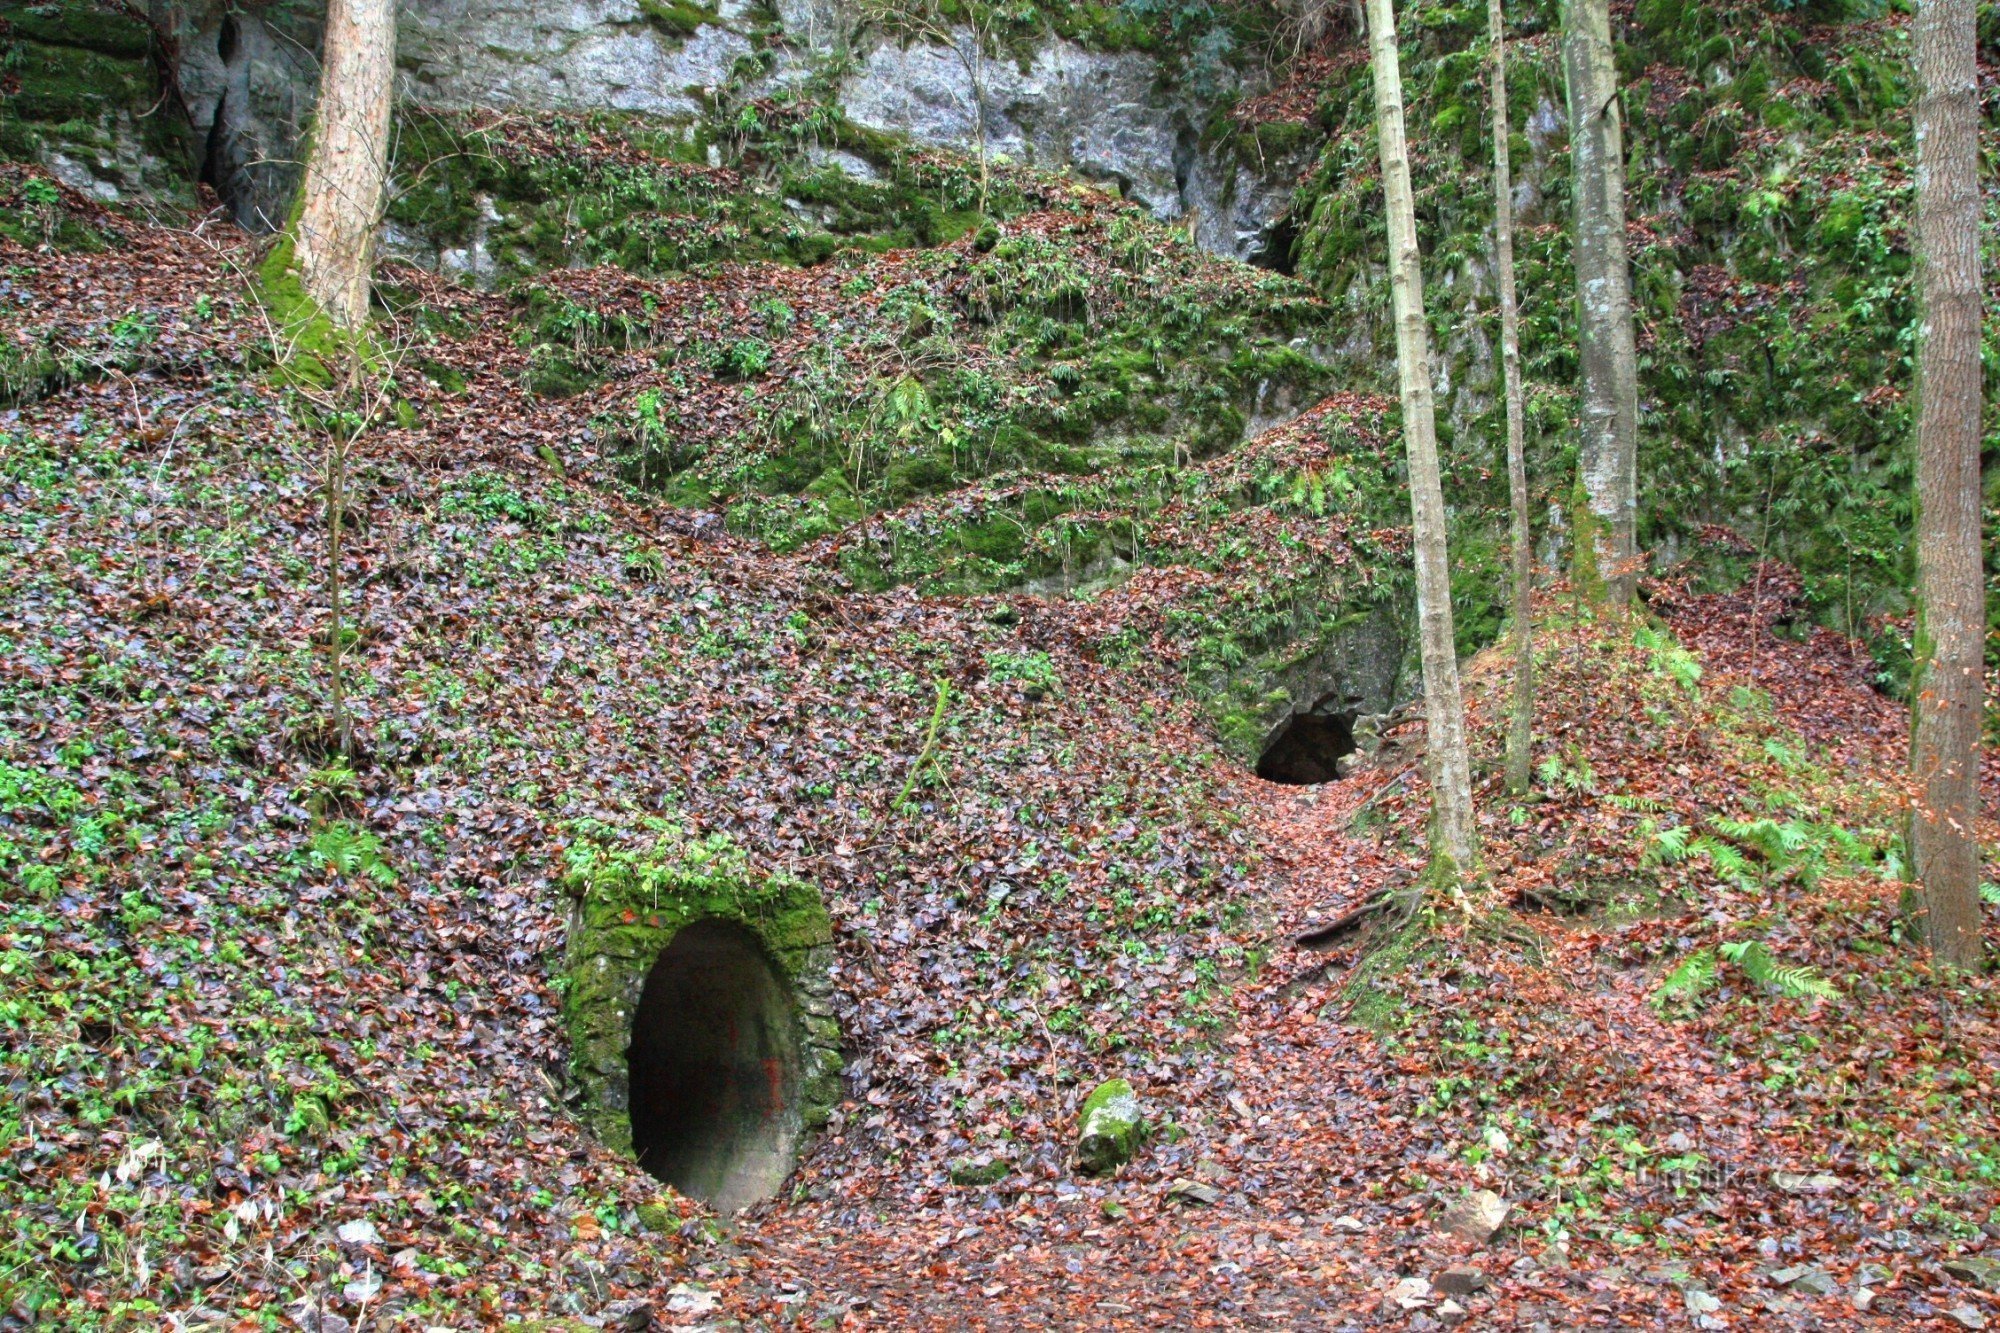 Entrance to Amatérská cave, right under the rock entrance to Pod javorem cave